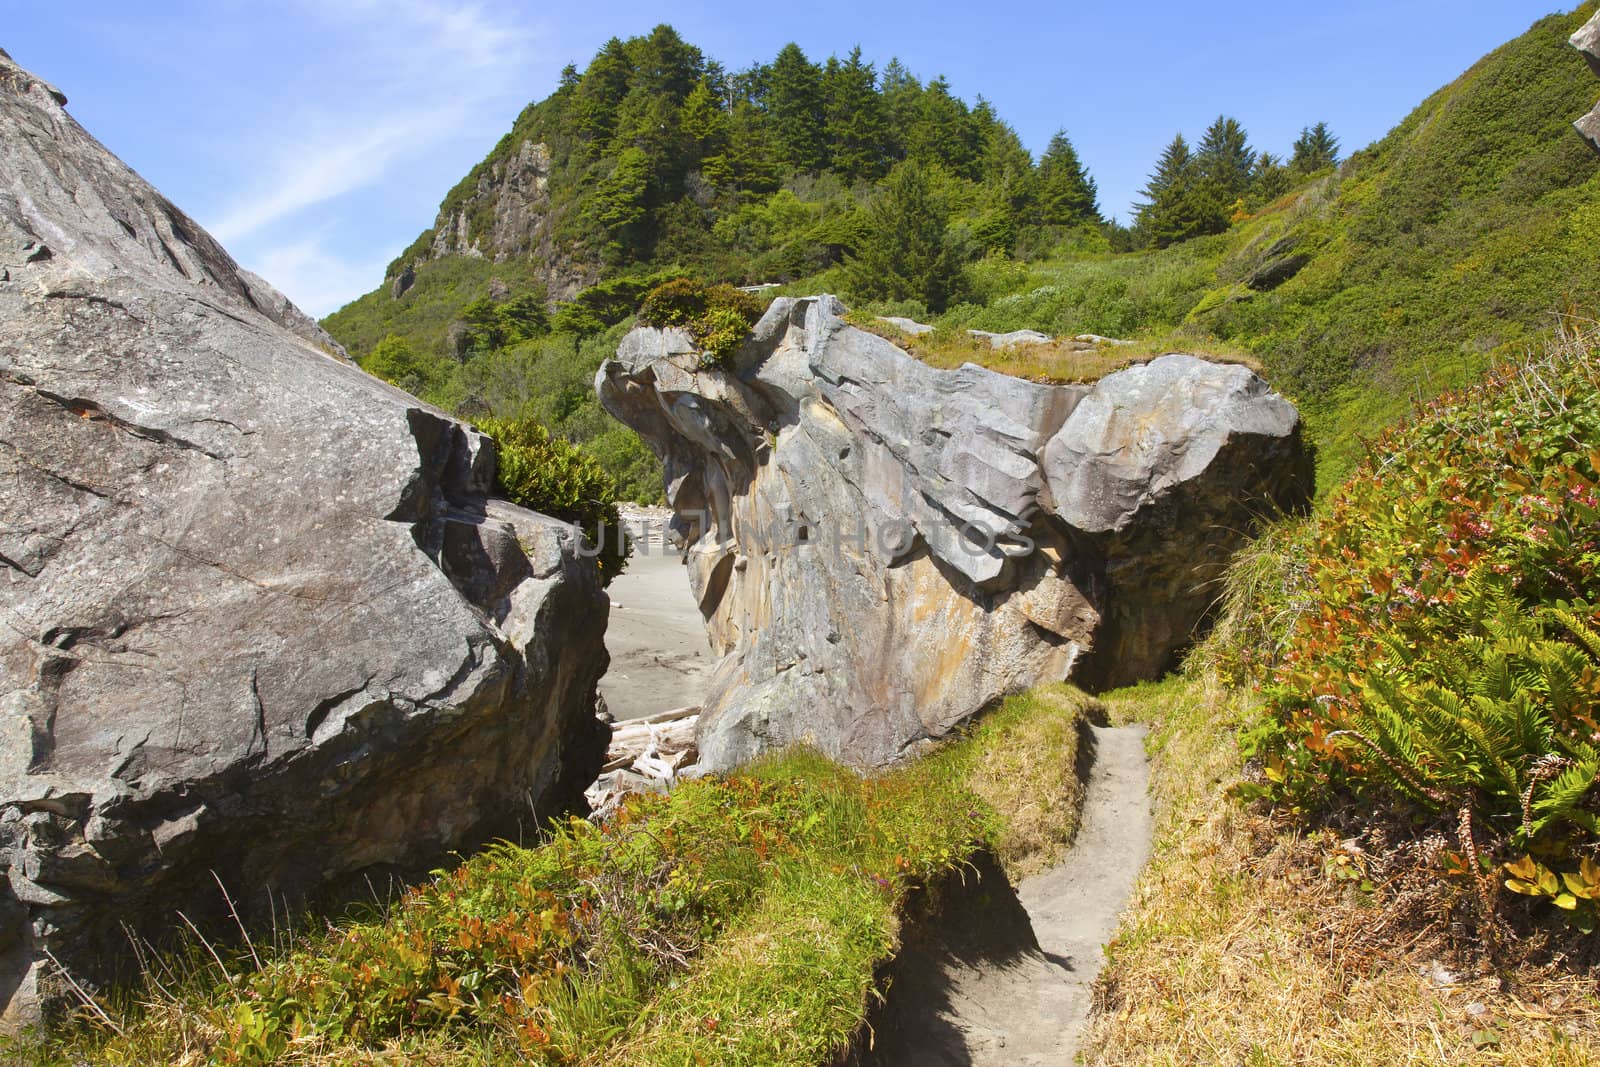 Large rocks vegetation and sand trails on the Oregon coast.